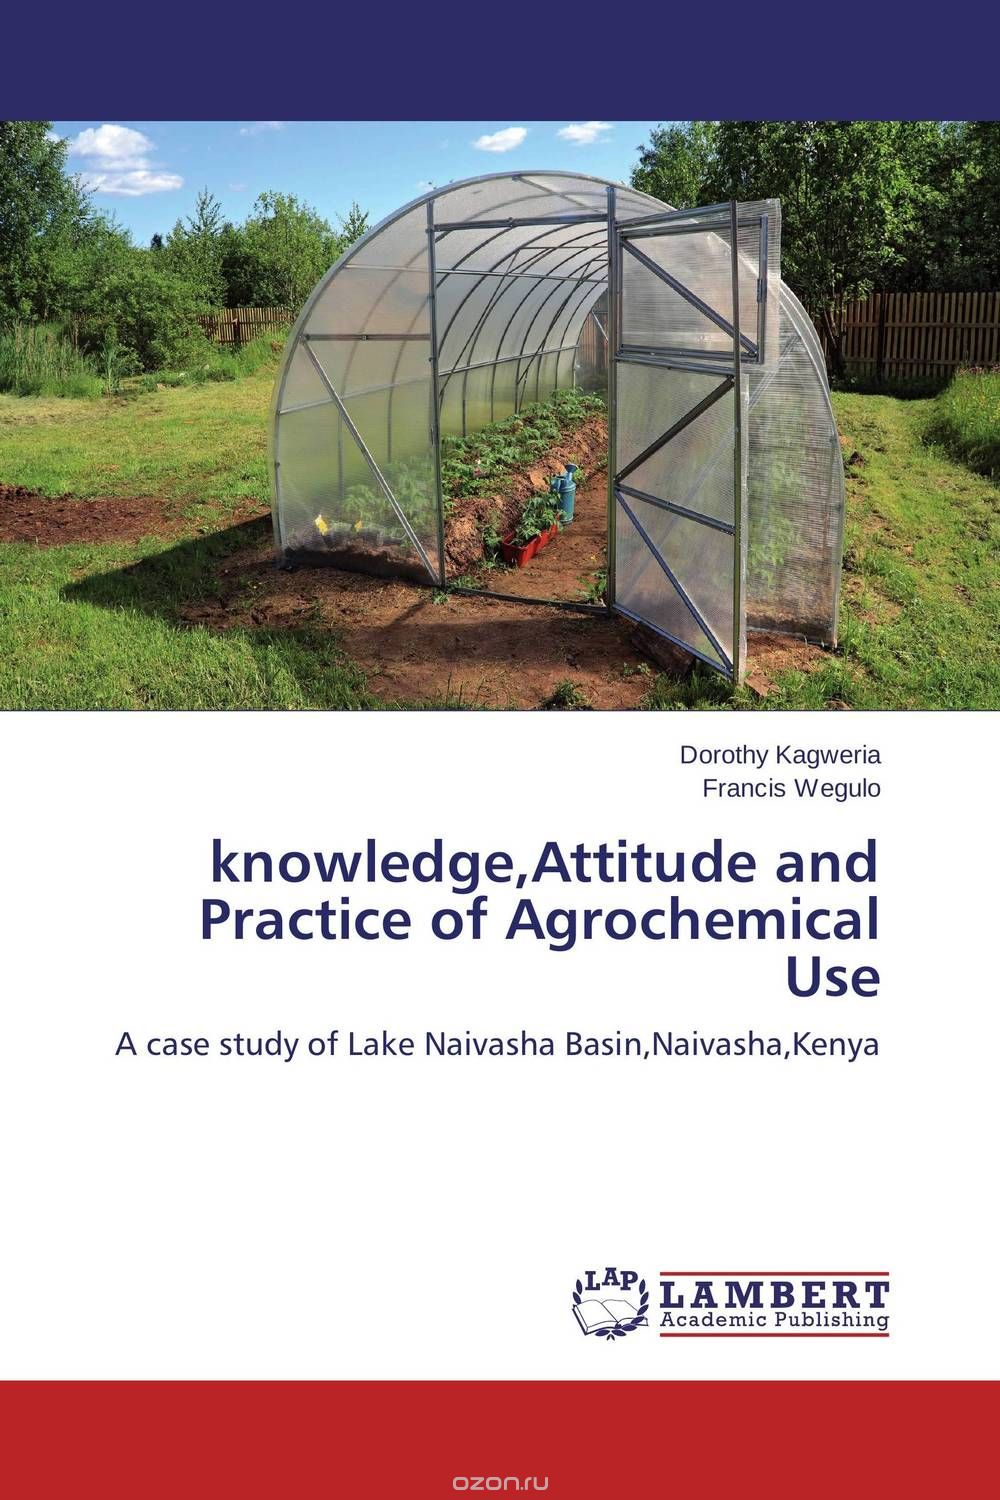 Скачать книгу "knowledge,Attitude and Practice of Agrochemical Use"